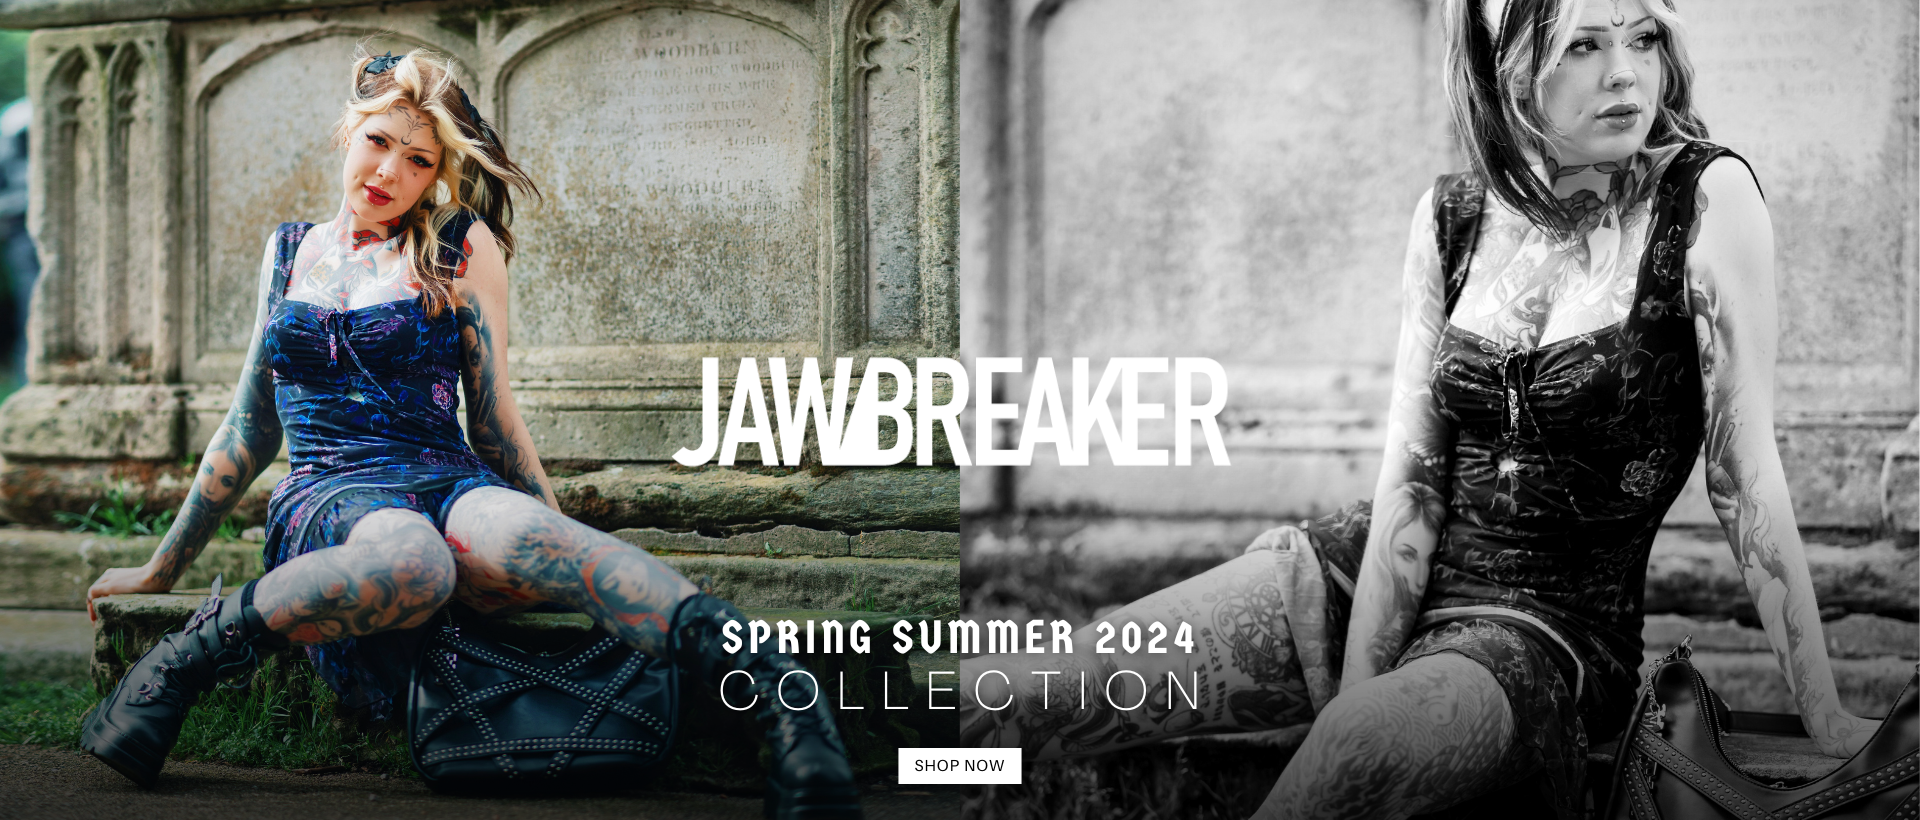 New collection | Alternative Gothic Punk Clothing | Jawbreaker